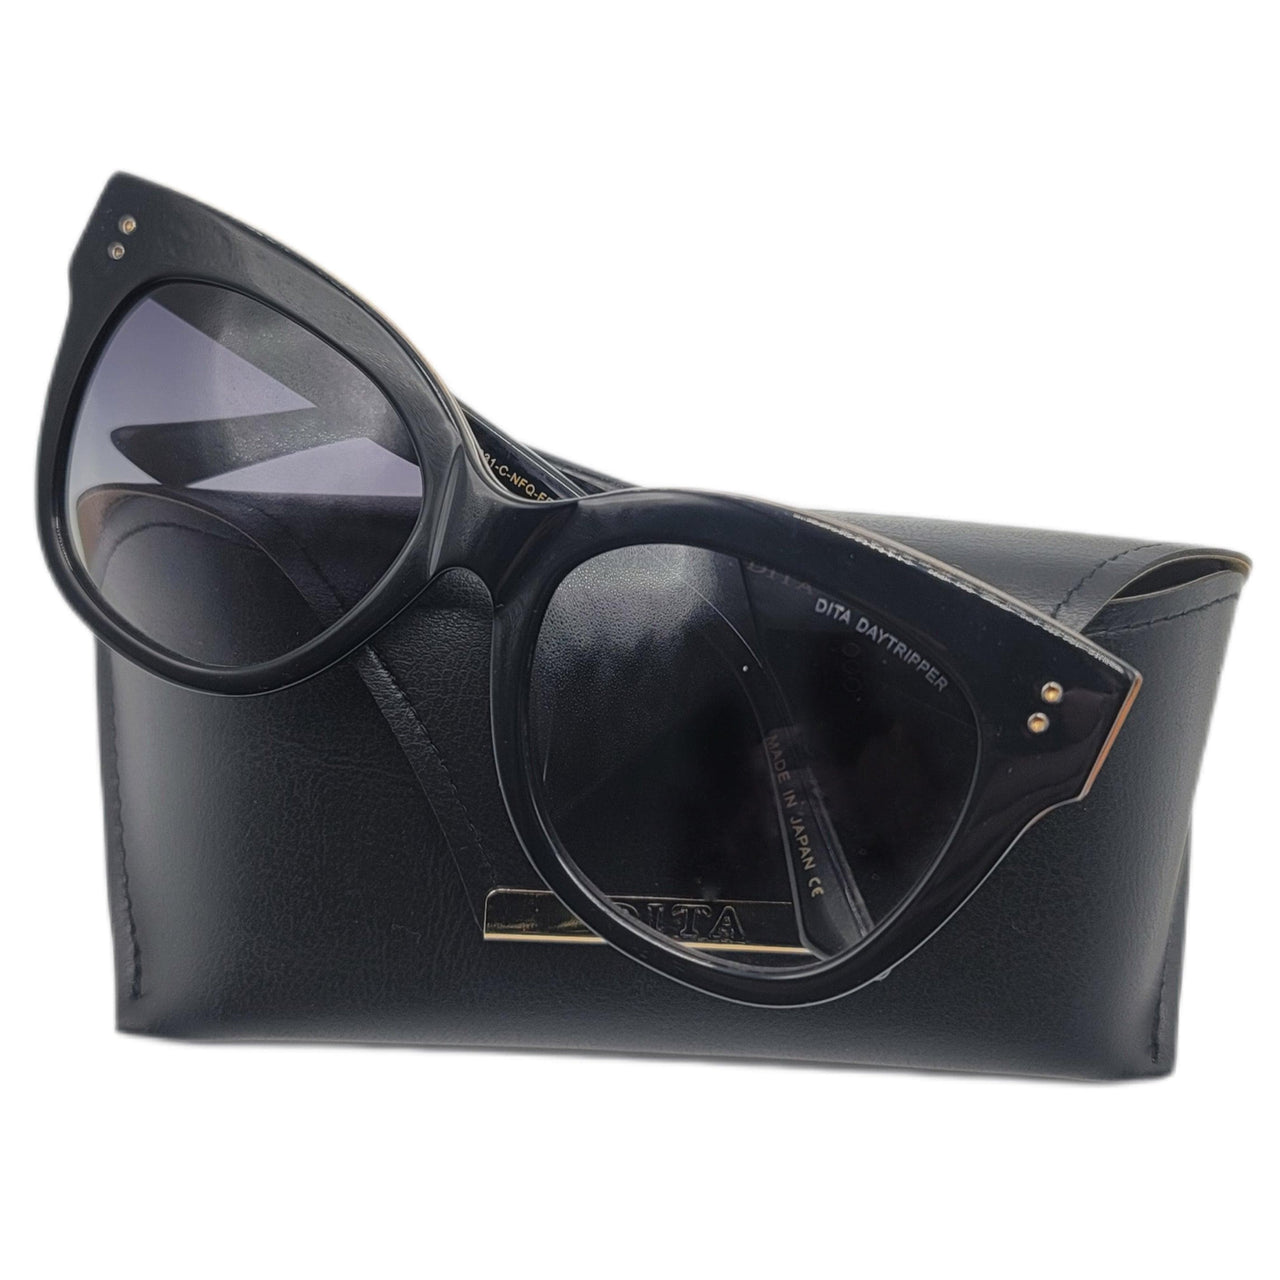 The Bag Couture Sunglasses DITA Daytripper Sunglasses BL